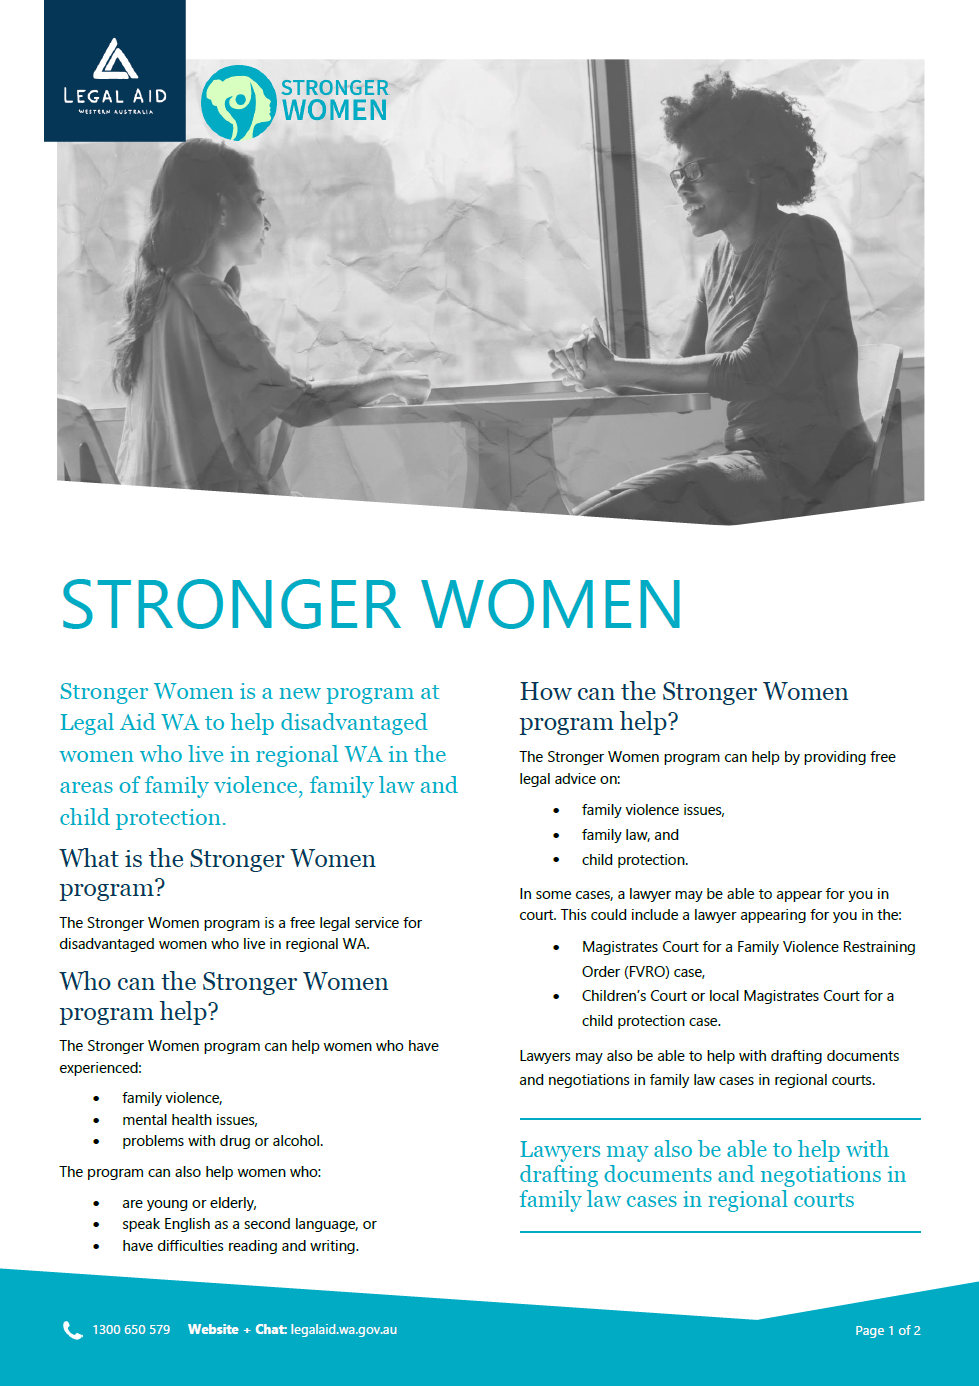 Thumbnail of Stronger Women fact sheet